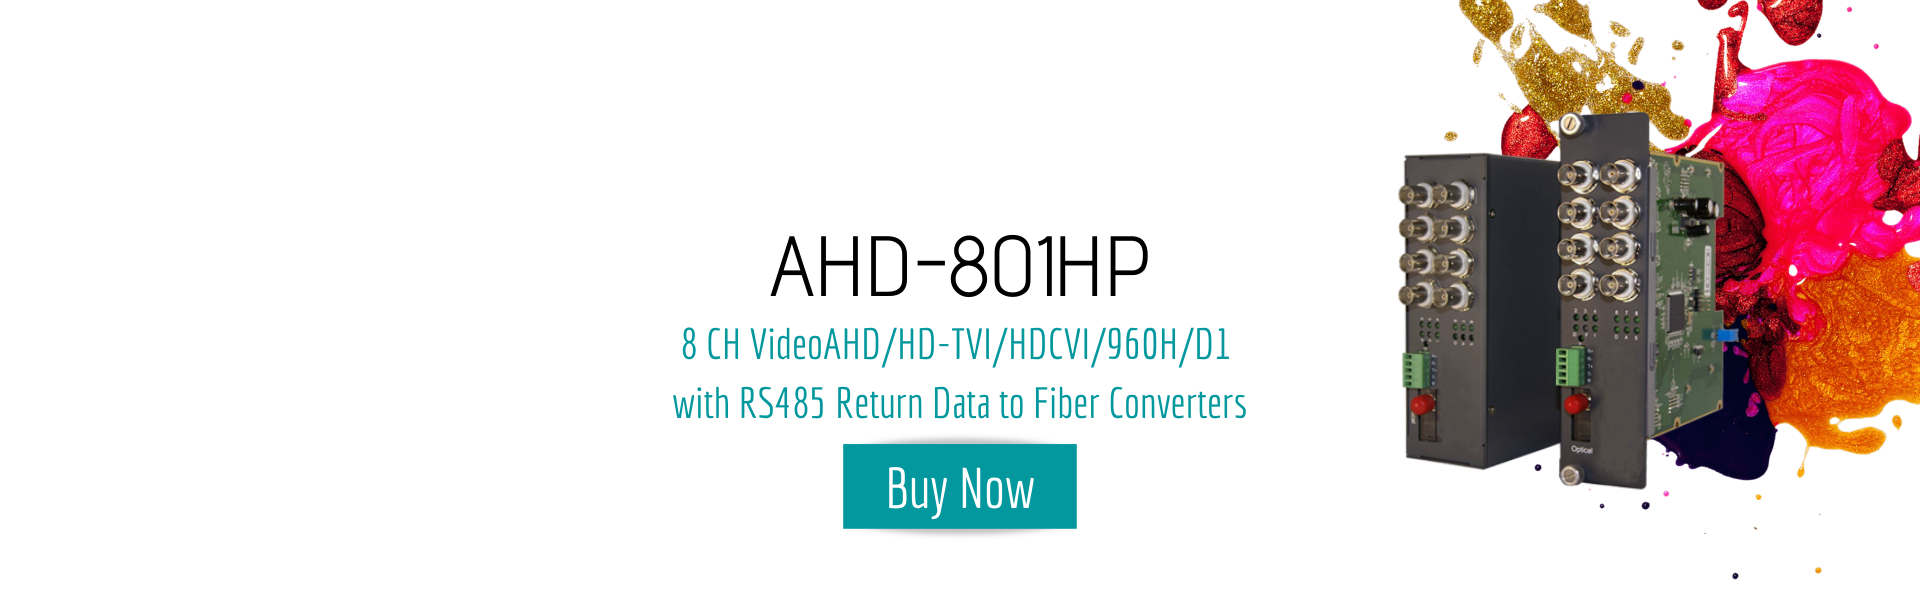 ahd-801hp_banner_optical_fiber_converter_ahd